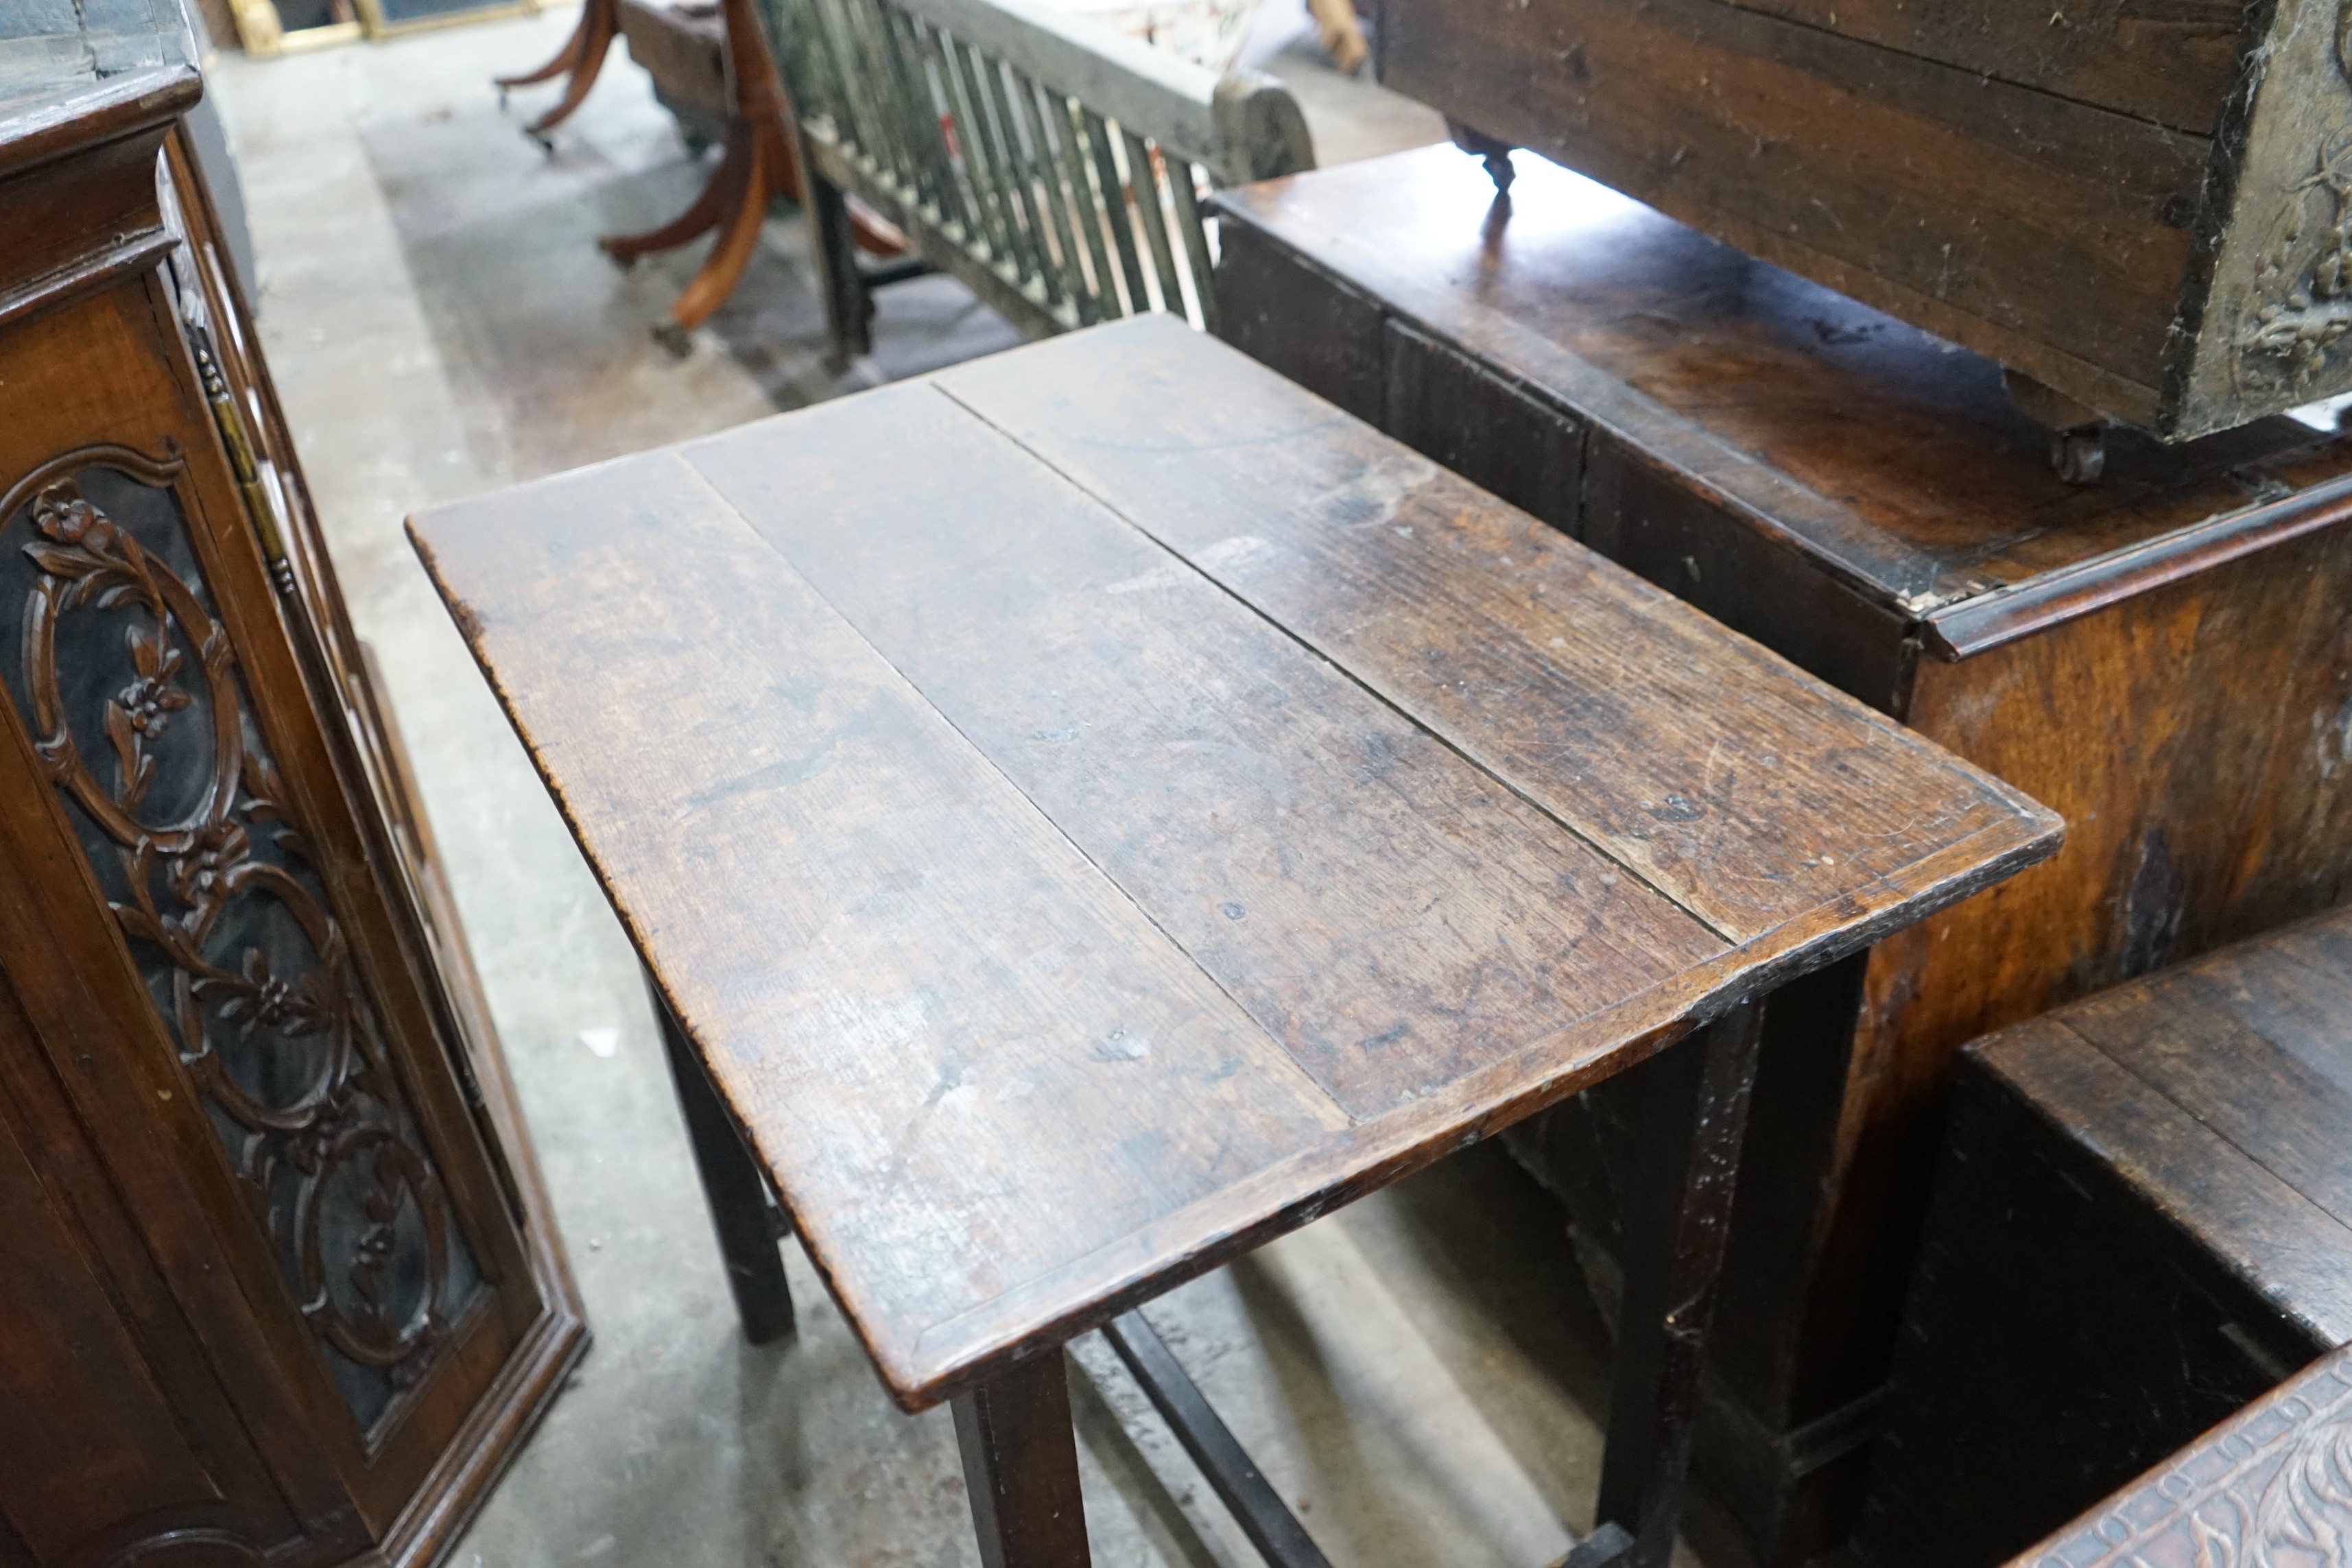 An 18th century provincial oak side table, width 79cms, depth 56cms, height 70cms.